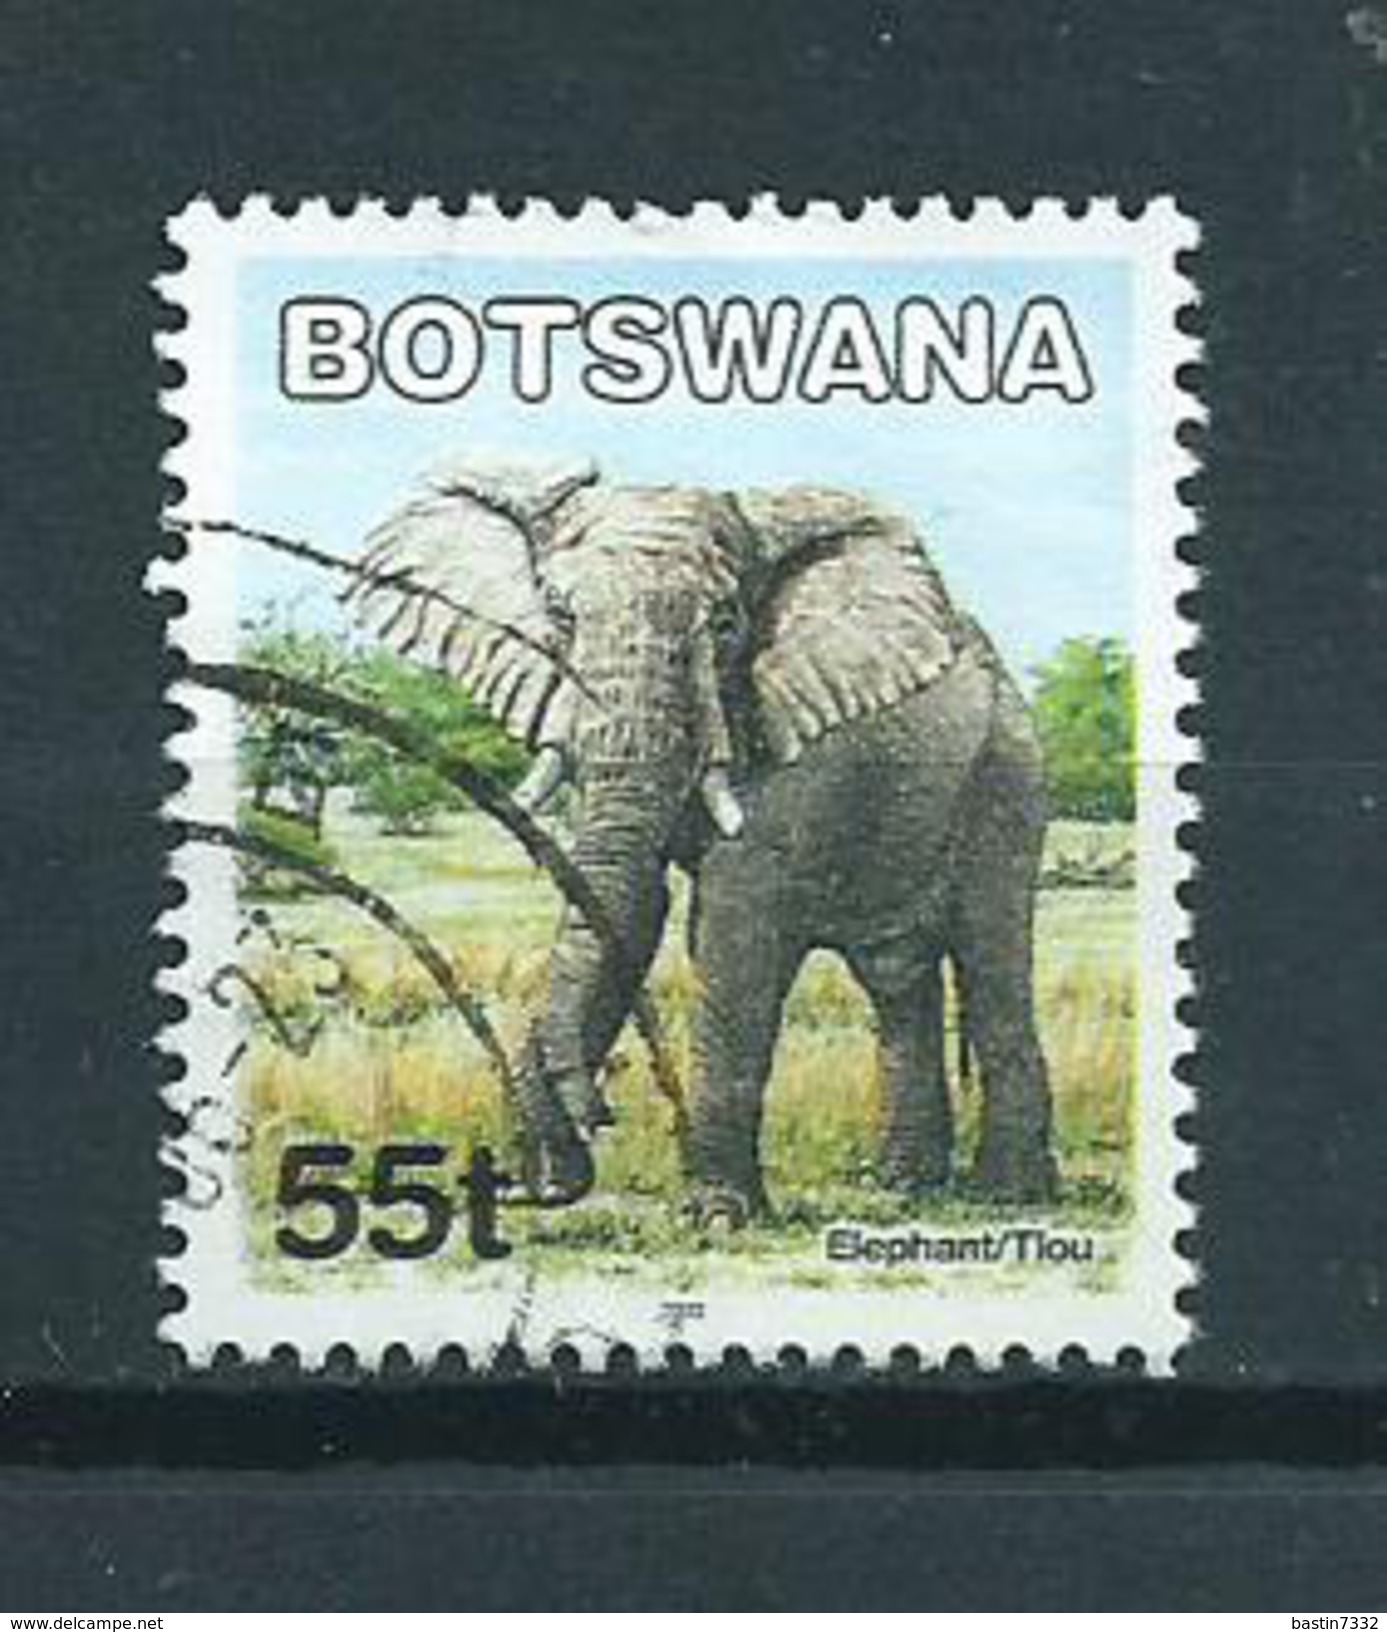 2002 Botswana 55t Elephant,olifant,wild Animals Used/gebruikt/oblitere - Botswana (1966-...)